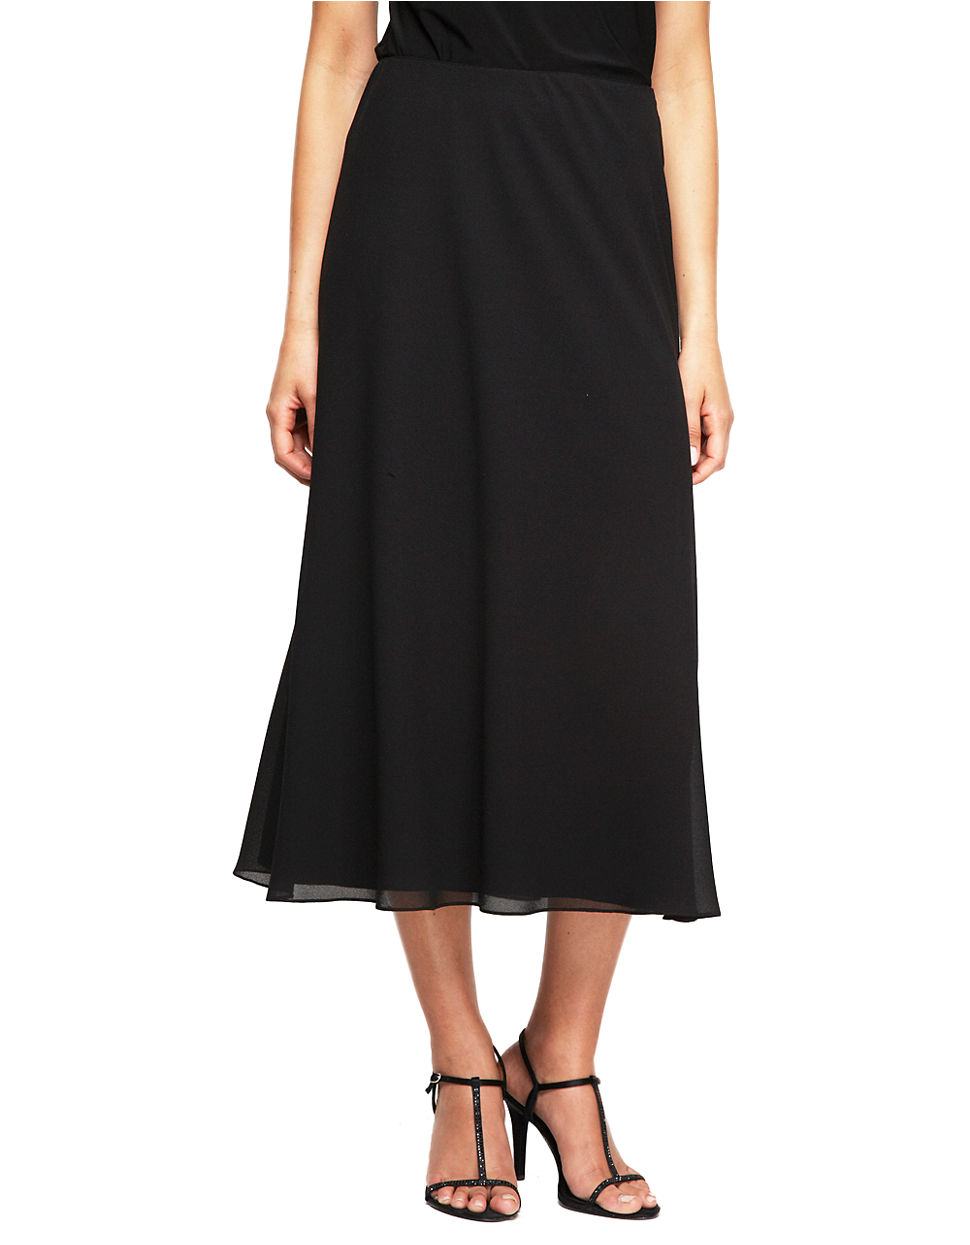 Lyst - Alex Evenings Plus Chiffon T Length Skirt in Black